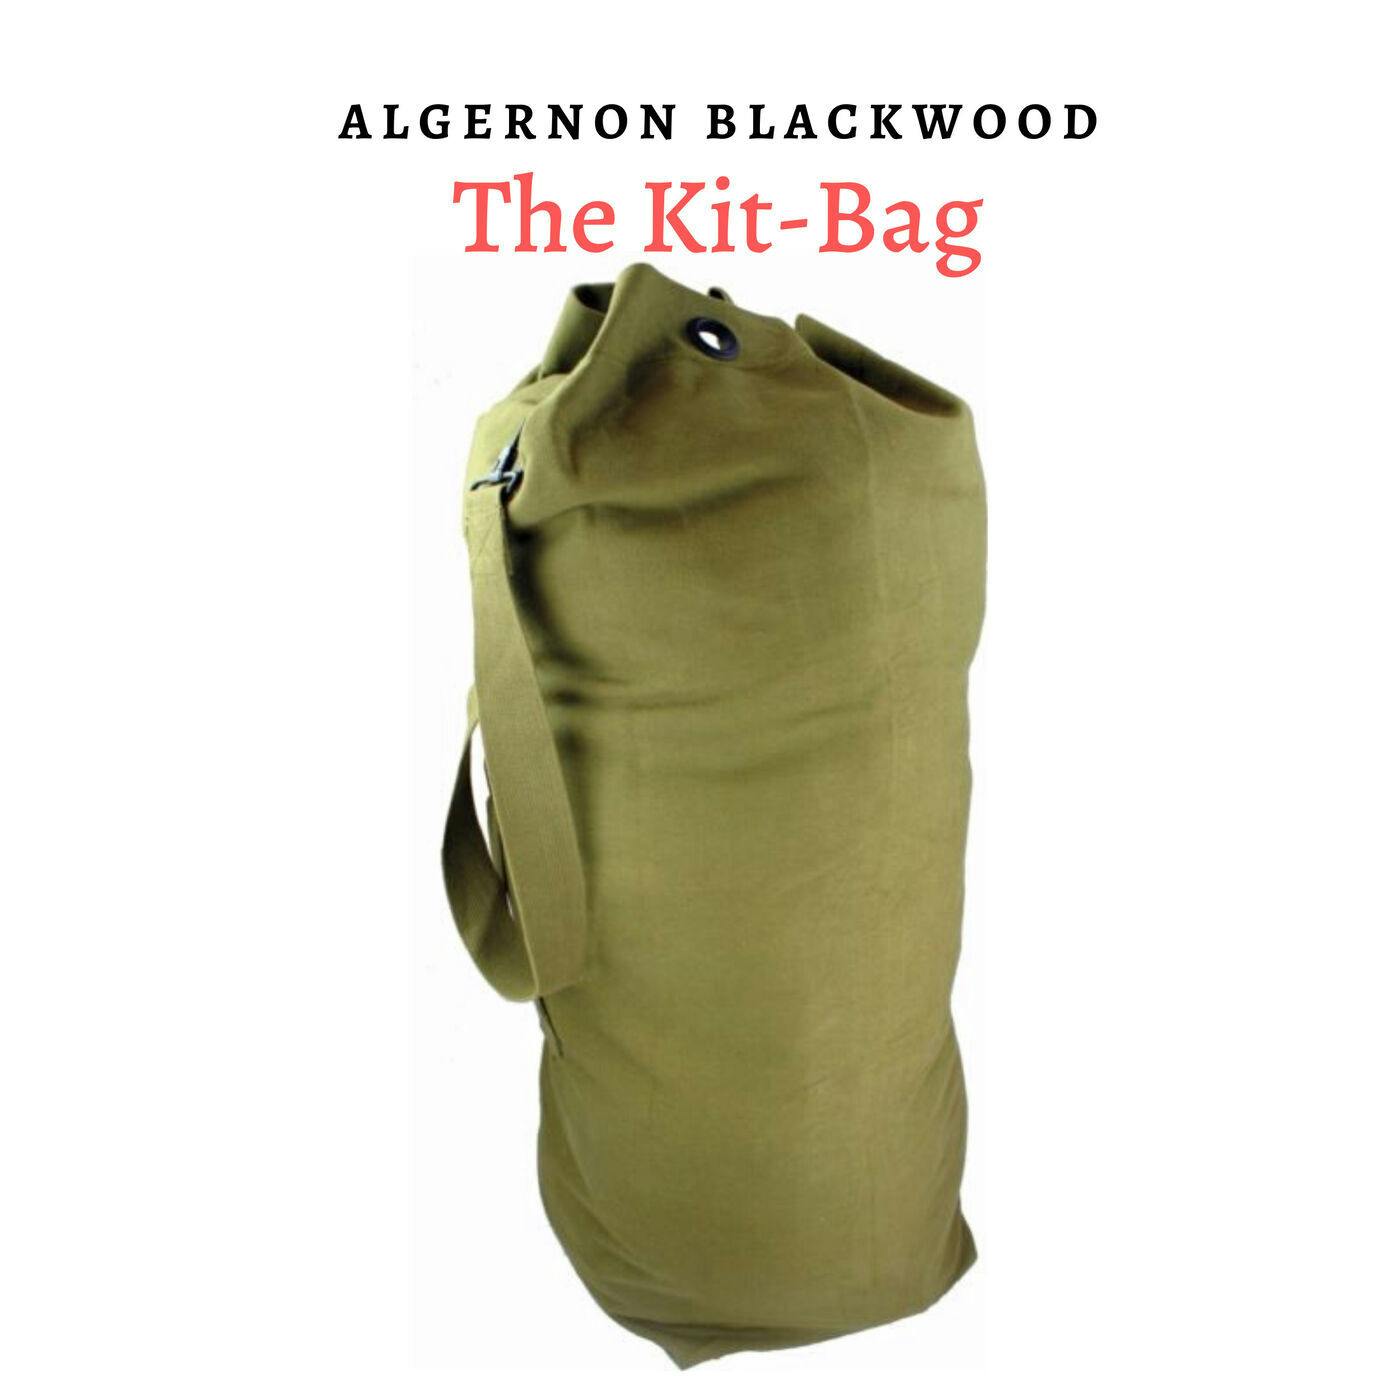 Episode 20: The Kit-Bag by Algernon Blackwood